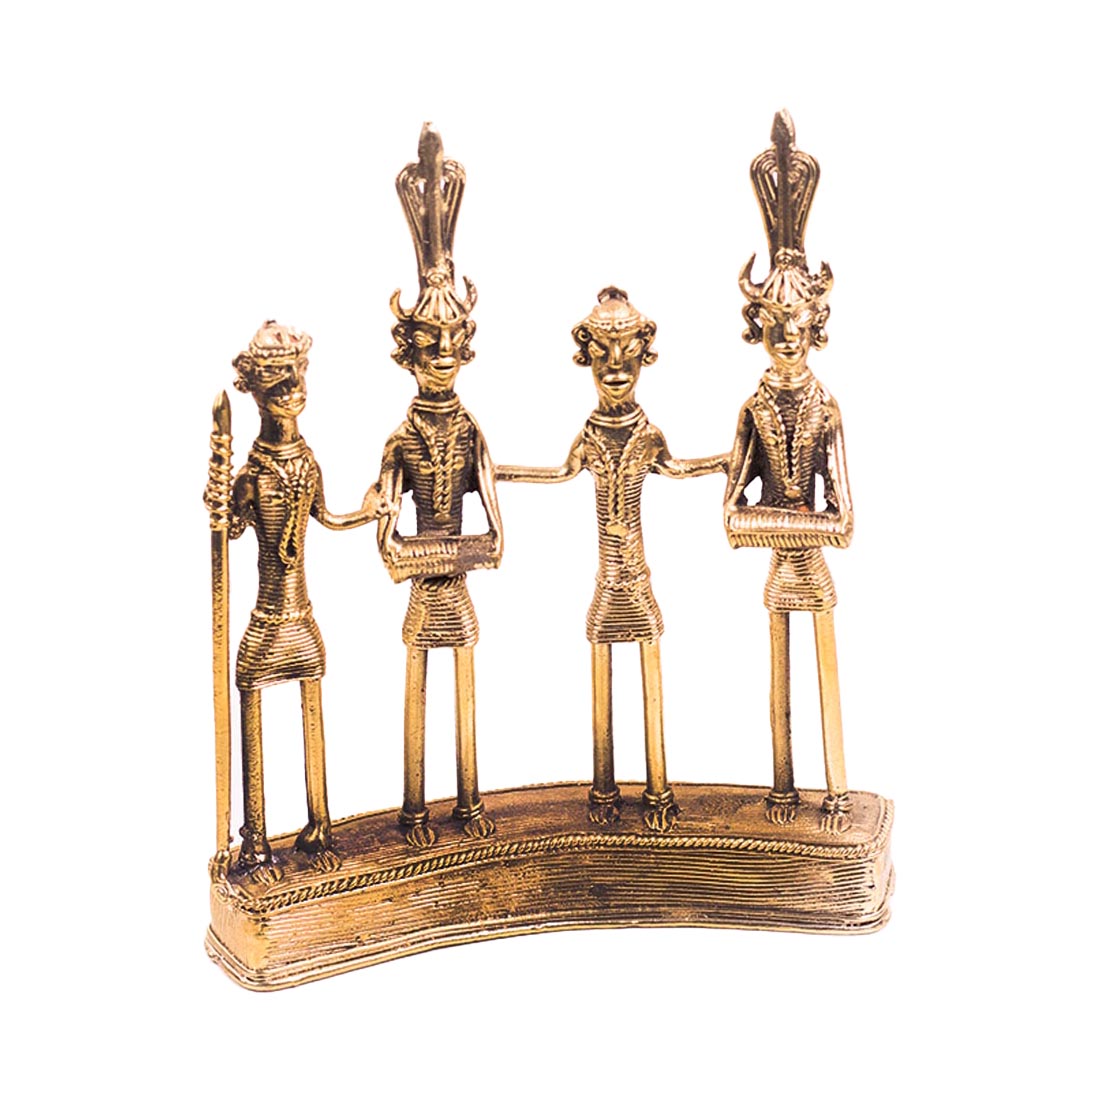 Handmade Brass Figurine of Four Tribe Musicians